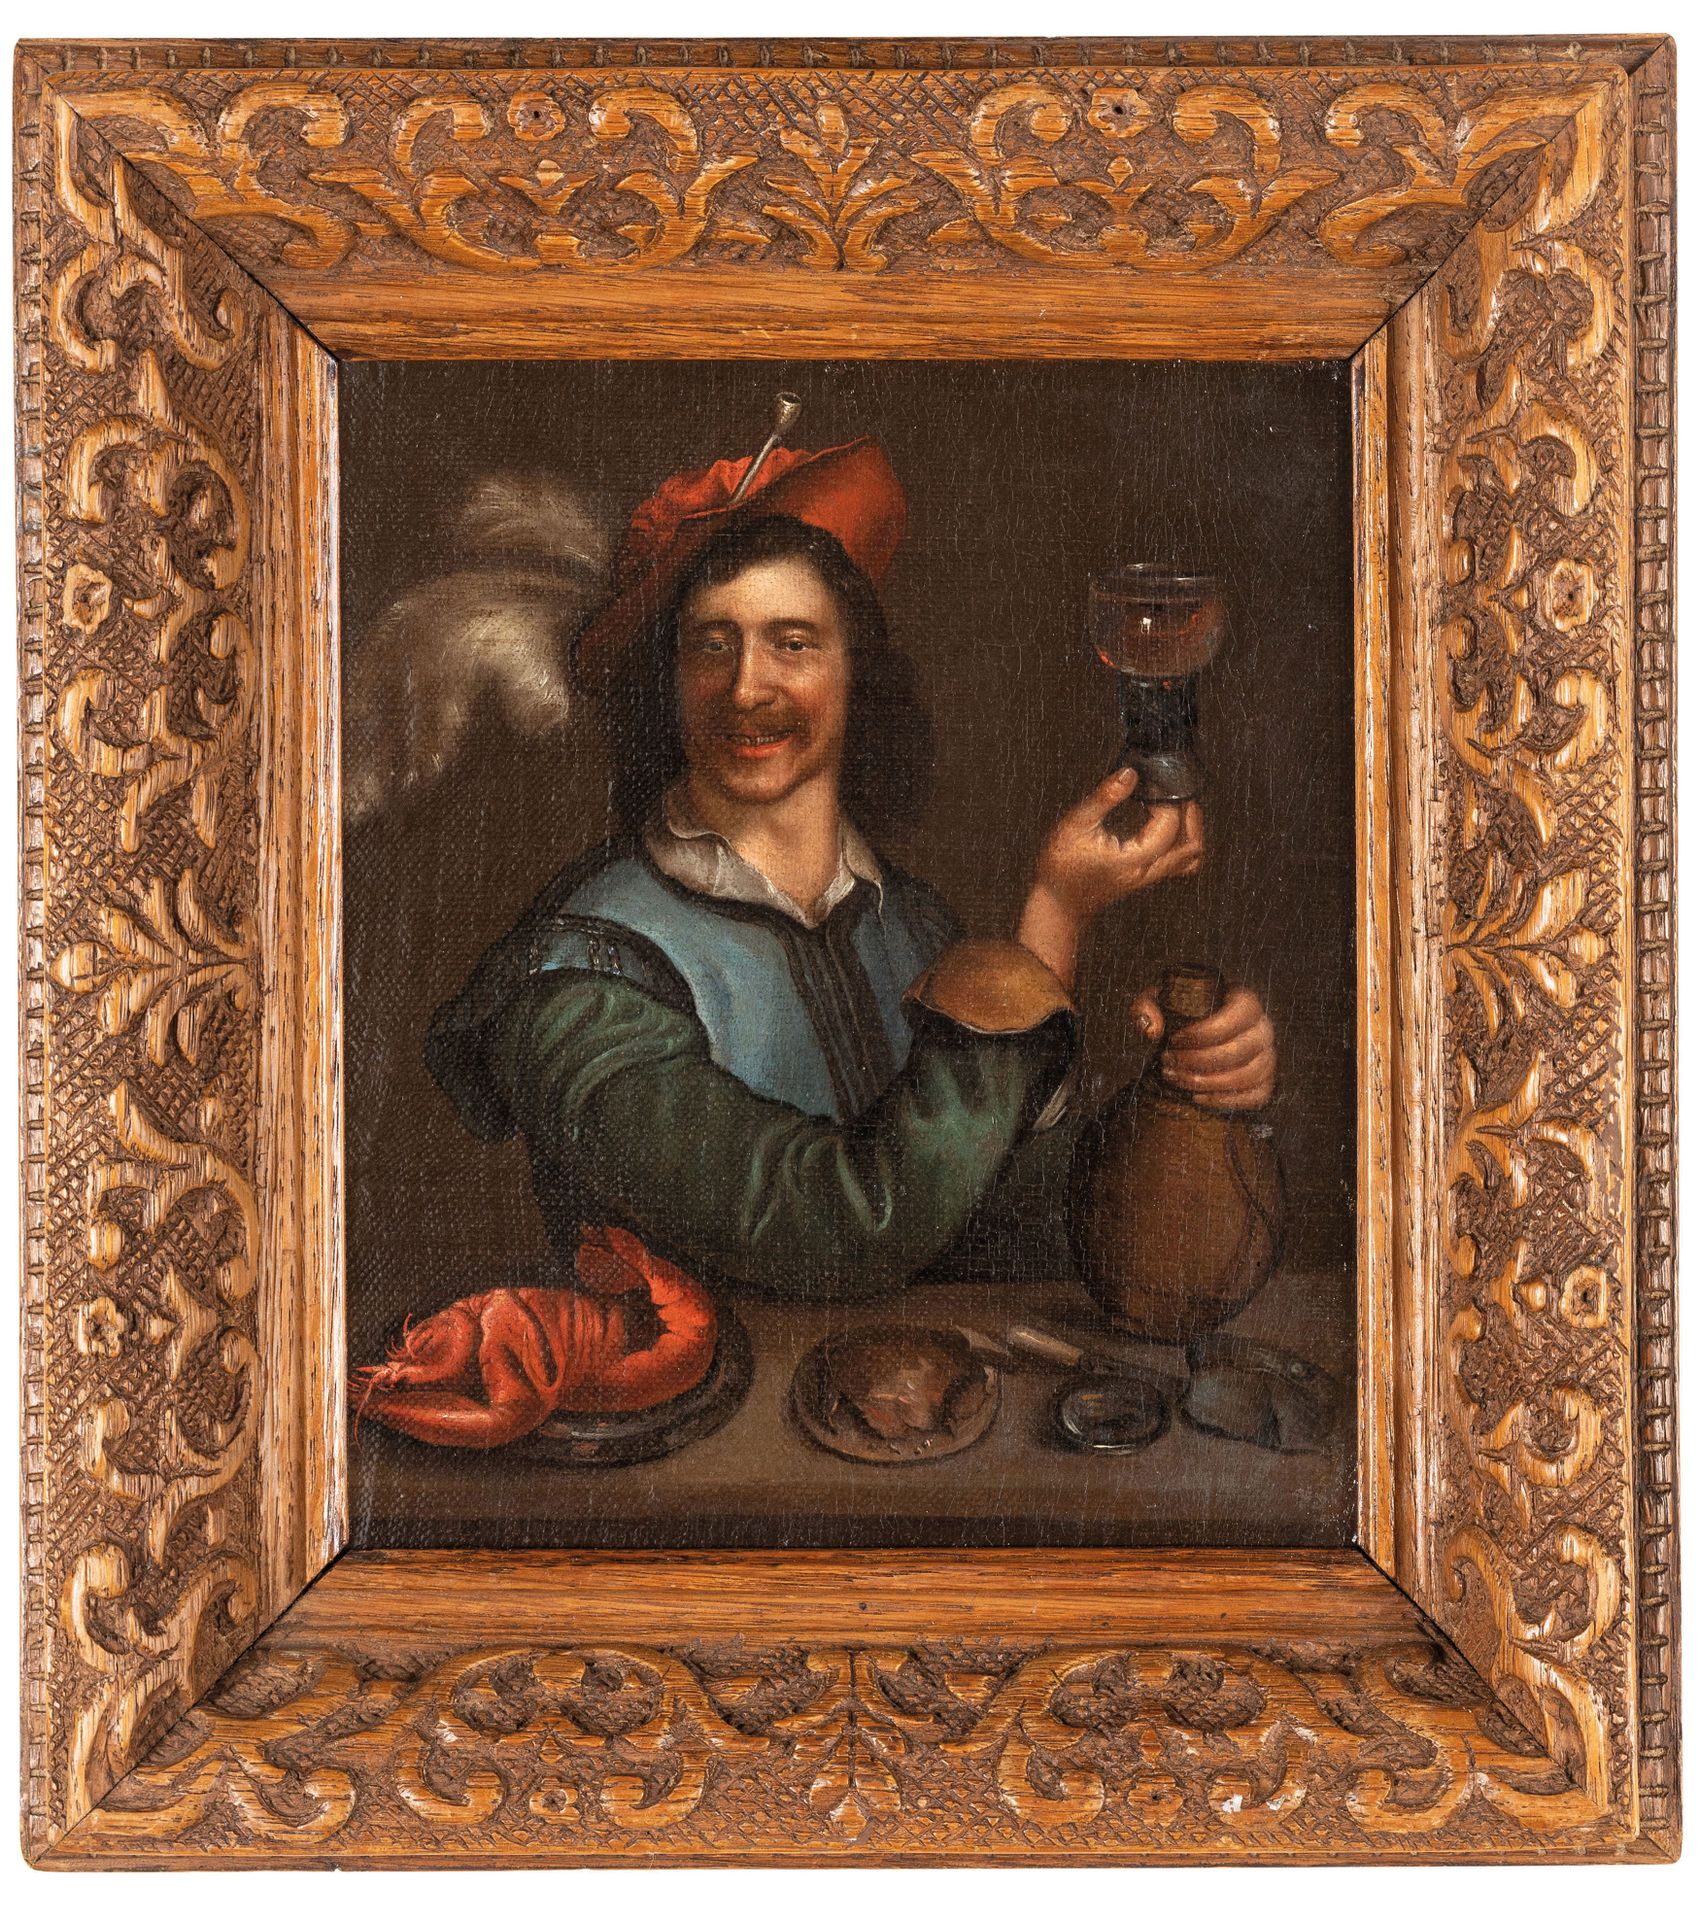 JAN VAN HELMONT (cerchia di) (安特卫普，1650 - 1714 /1734)
饮水机
布面油画，贴在木板上，cm 21X18